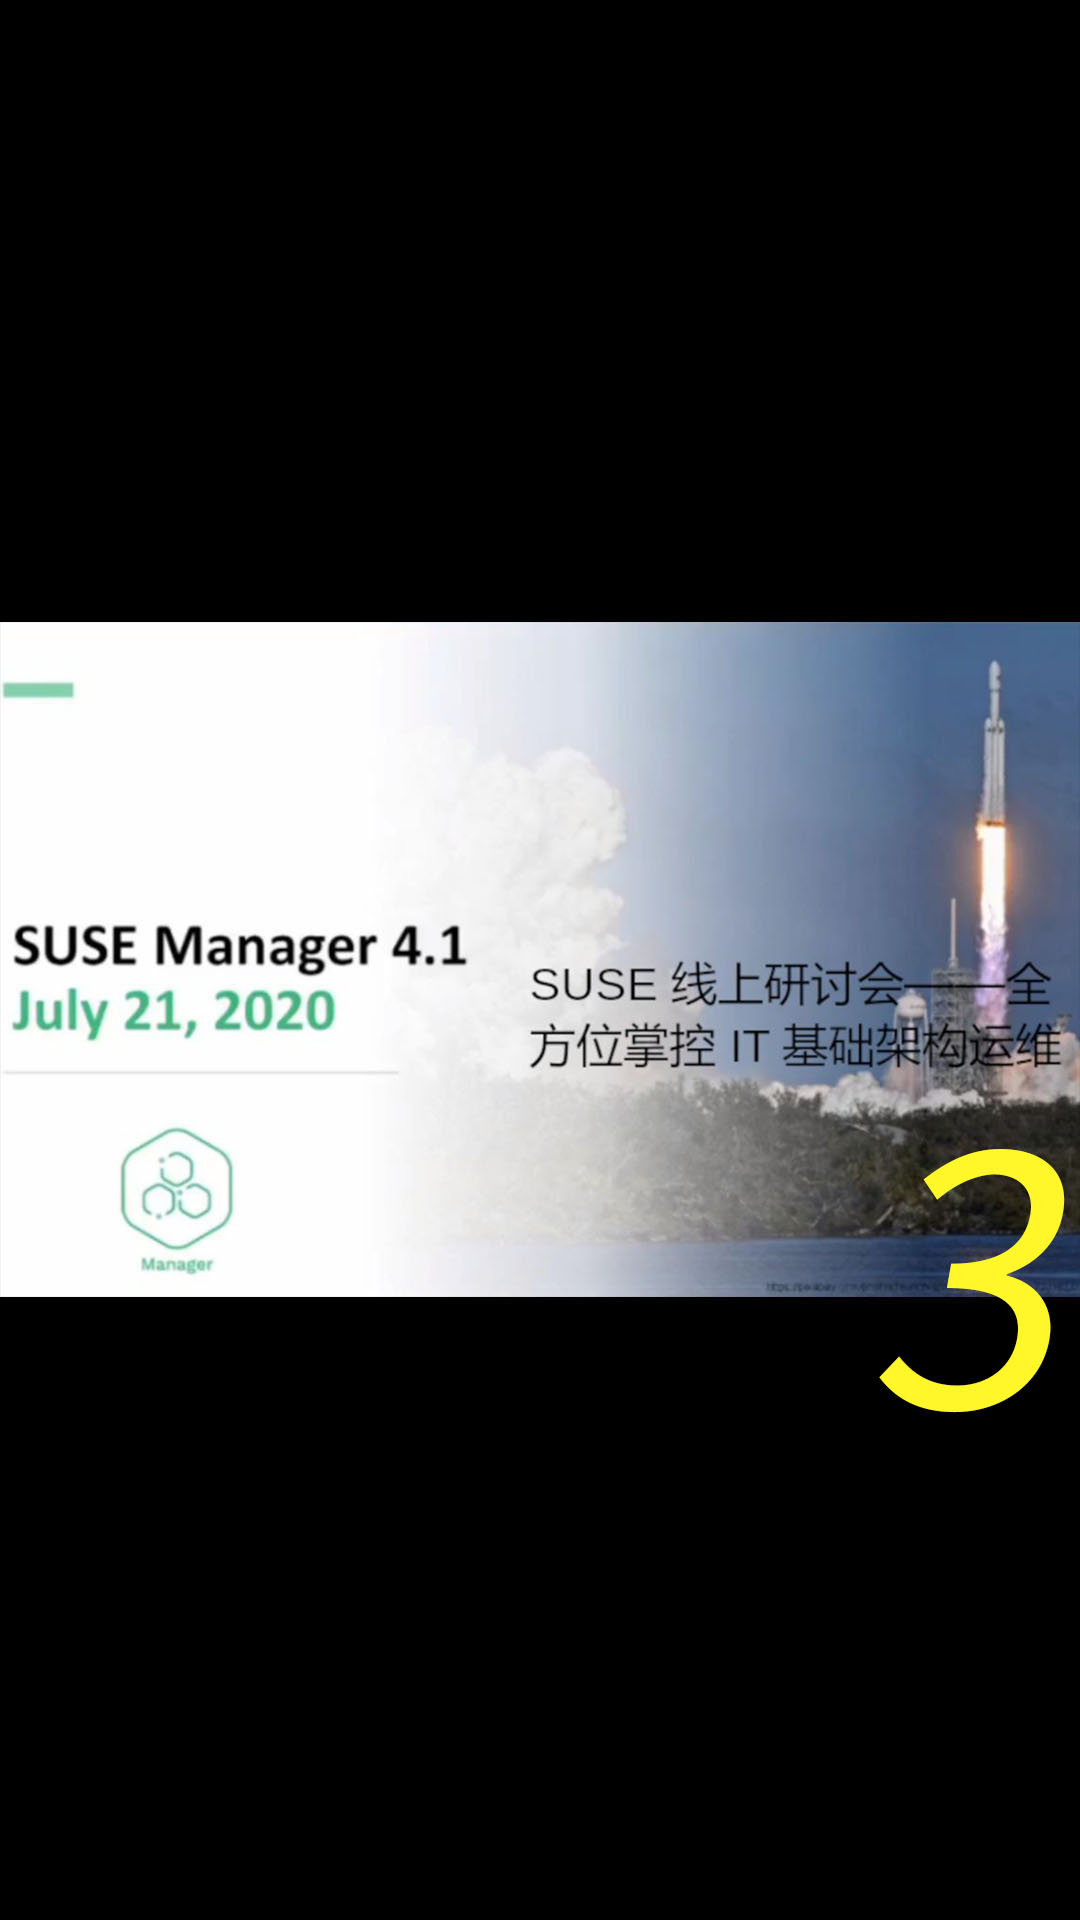 SUSE 线上研讨会——全方位掌控IT基础架构运维（在线学习分享）3